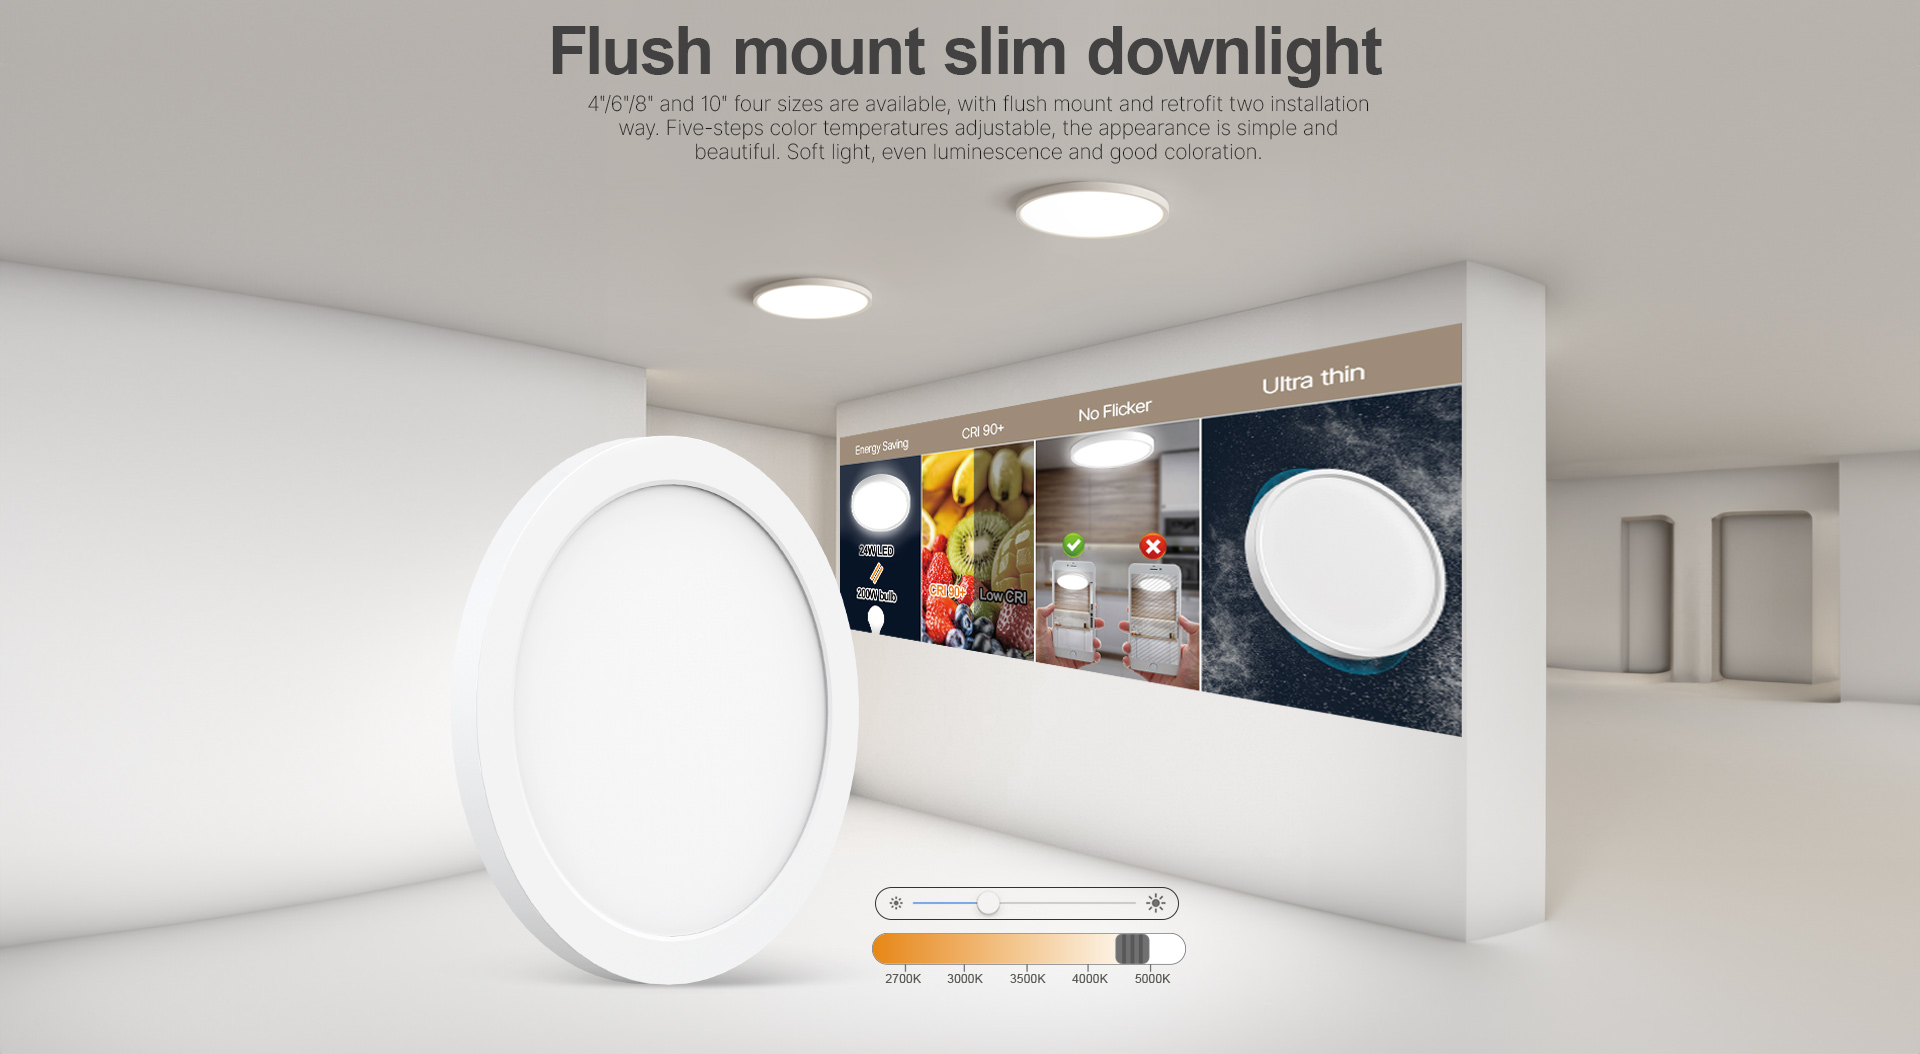 flush mount downlight